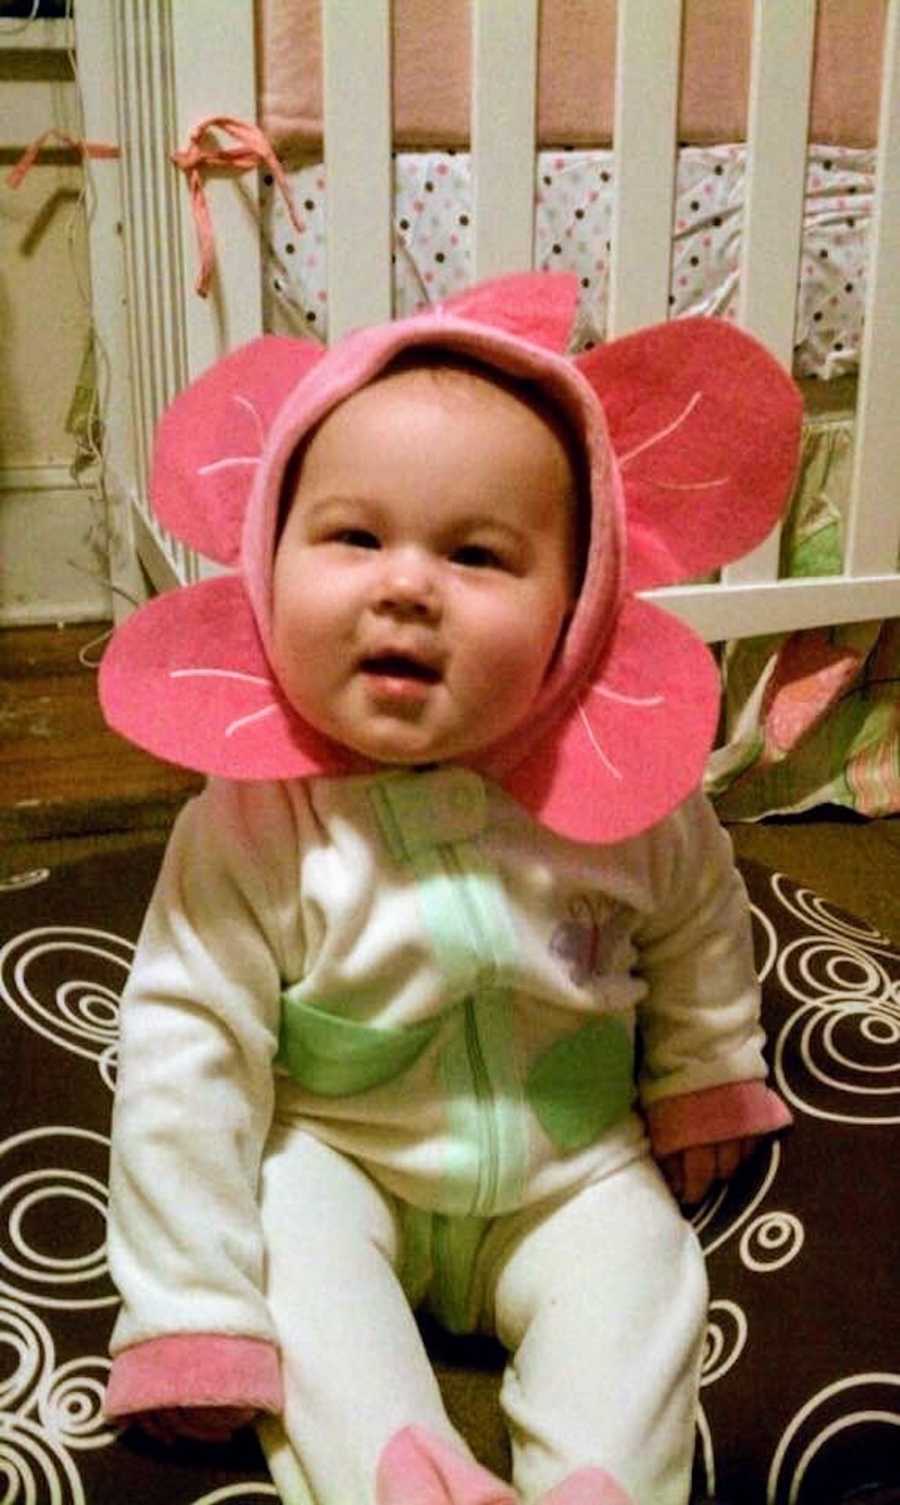 Baby girl sits on floor wearing onesie that has flower petals that goes around her head